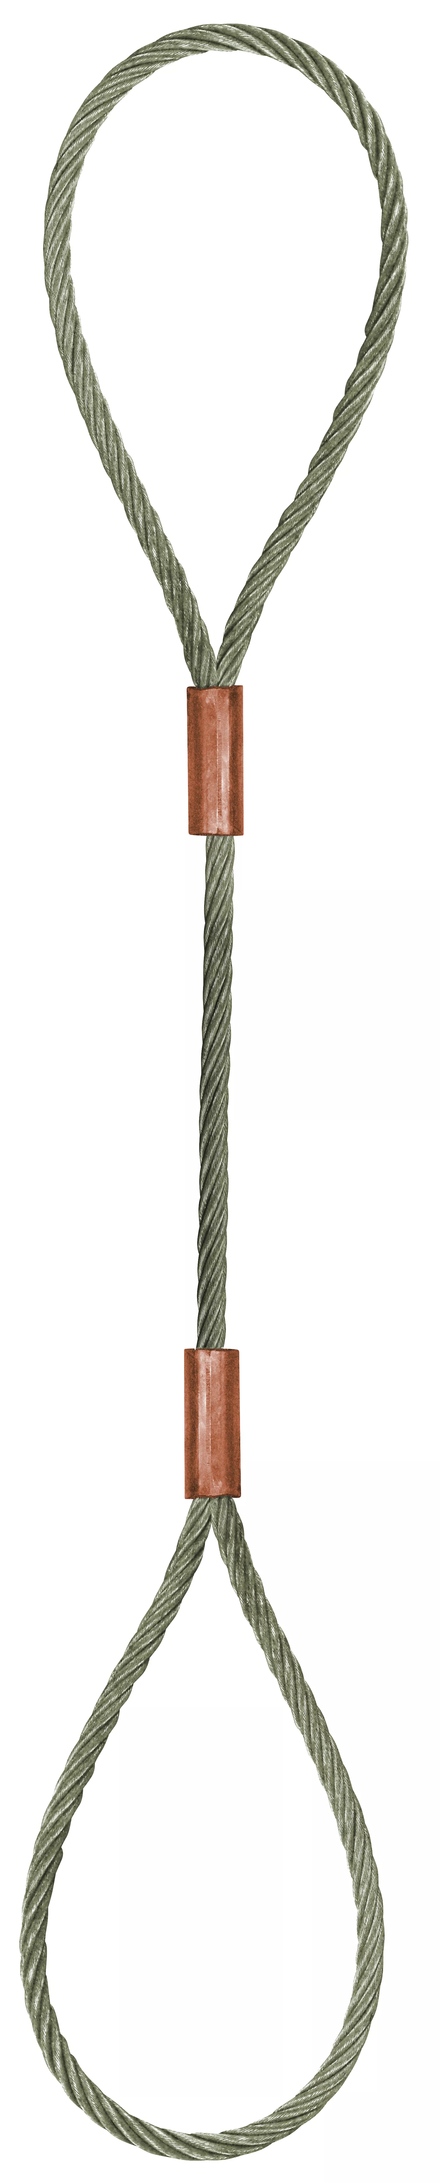 Élingue câble inox 2 grandes boucles d.16 mm cmu 2,5 t LEVAC - 4700LI